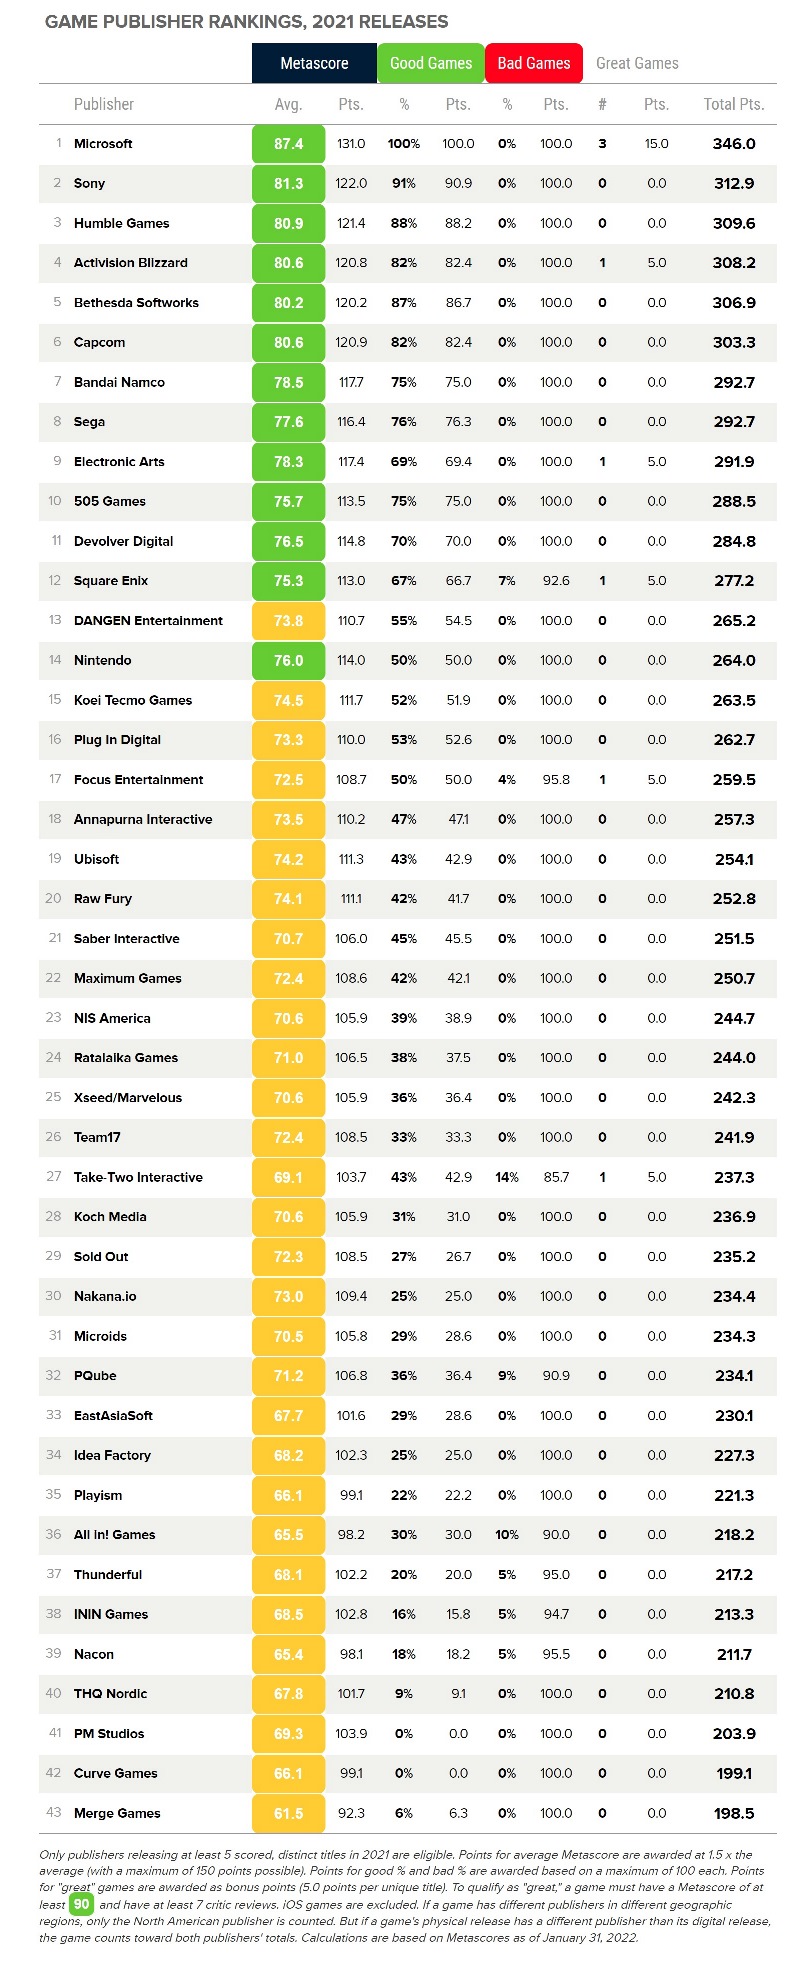 metacritic-publisher-rankings-2021-full-list.jpg